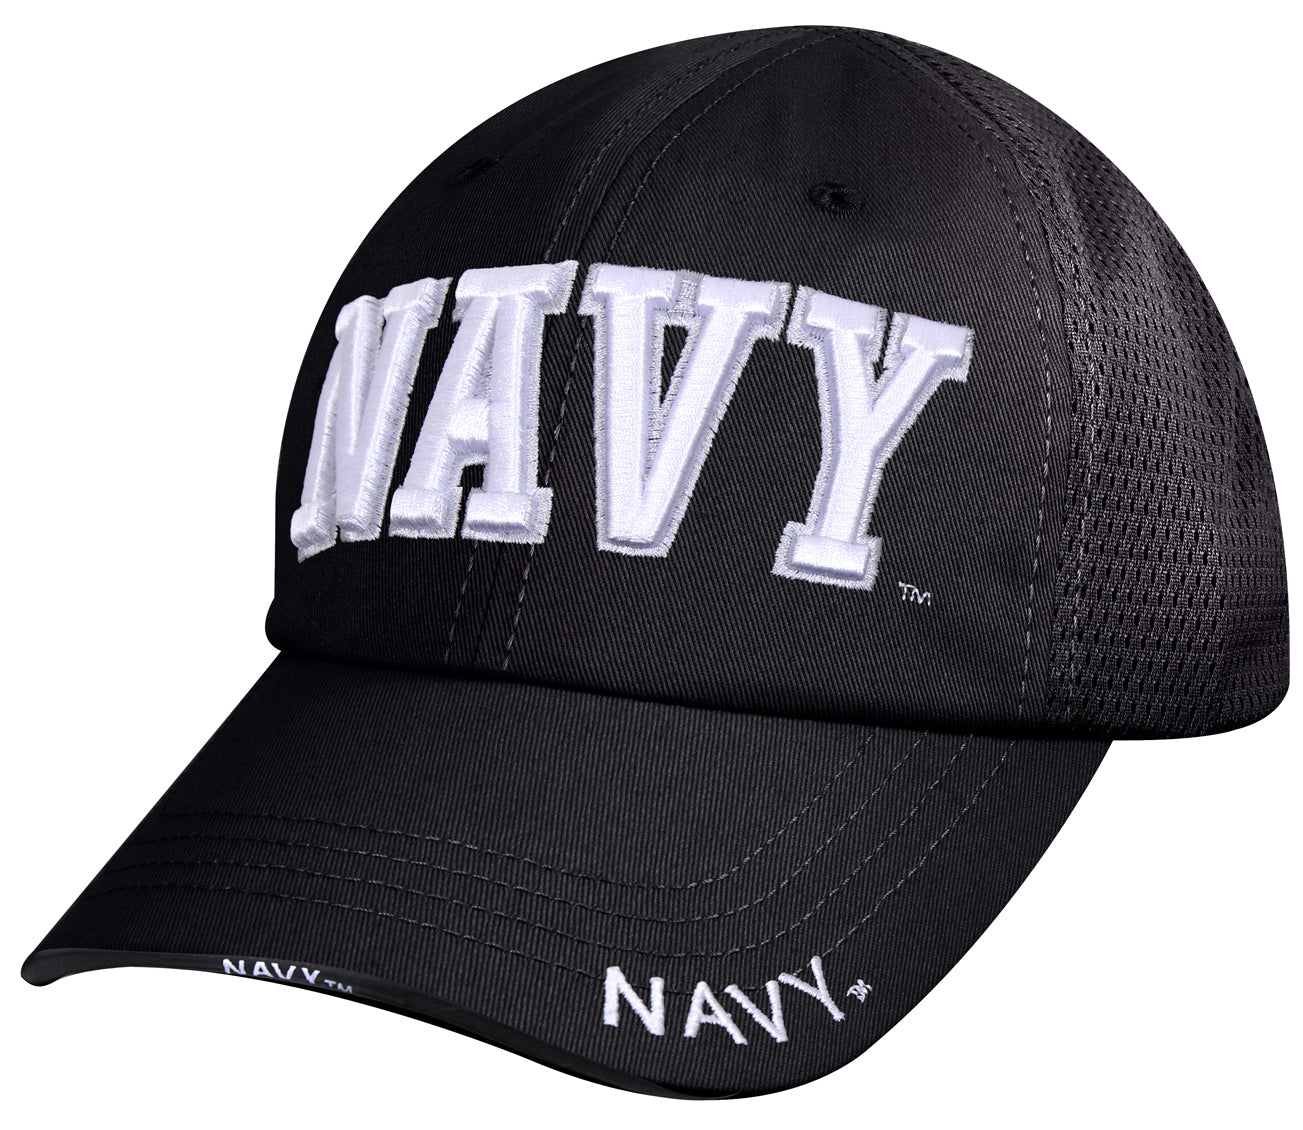 Navy Mesh Back Tactical Cap - Black - Tactical Choice Plus